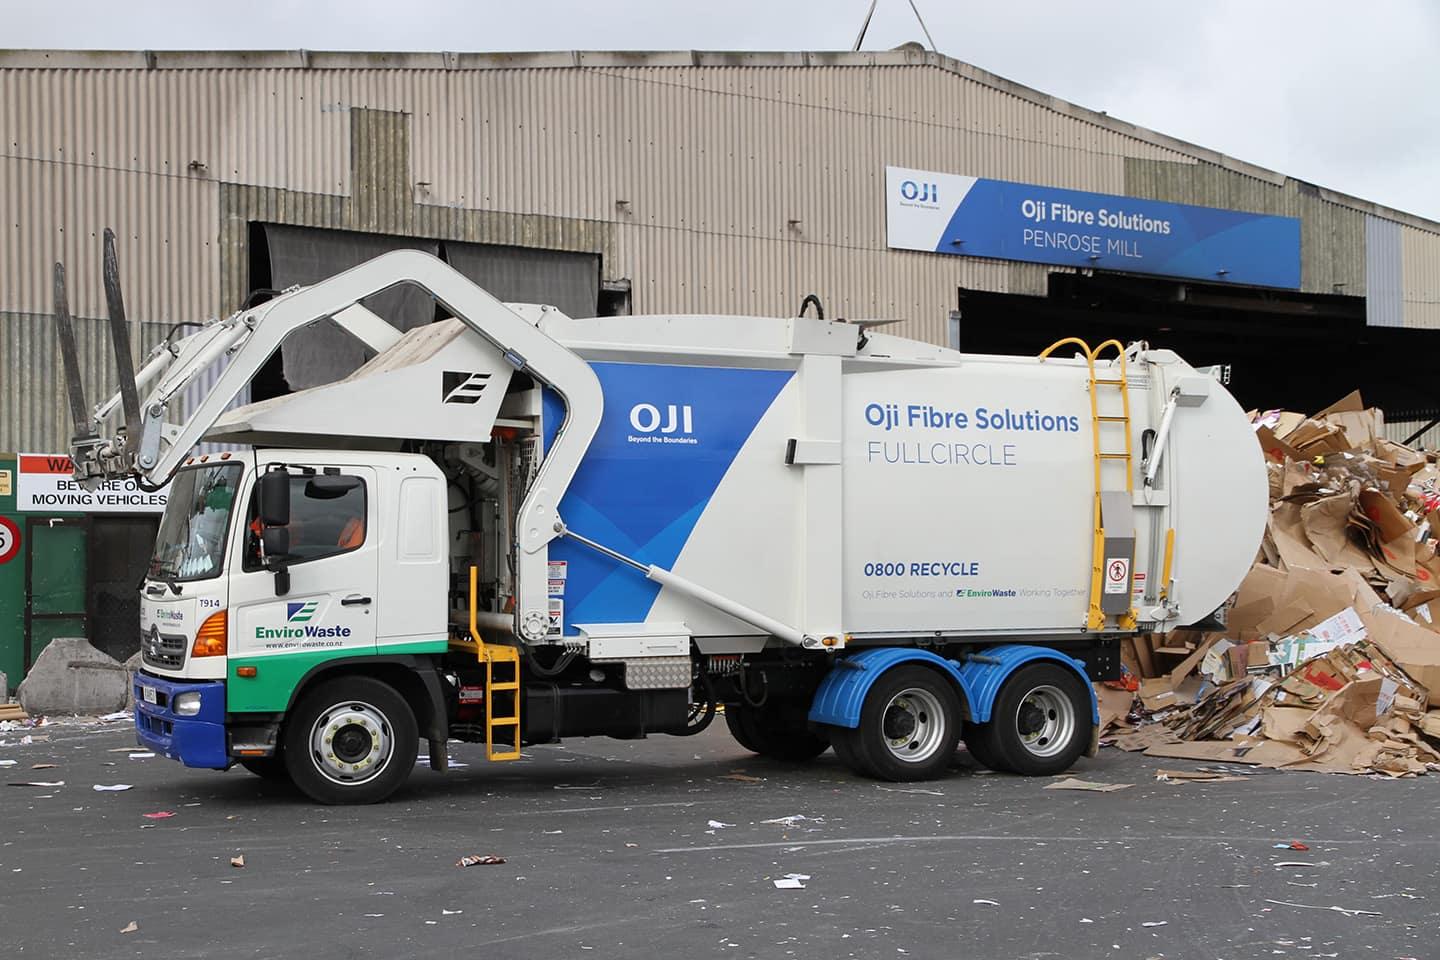 Skip-It Waste Services  Central Otago Skip Hire